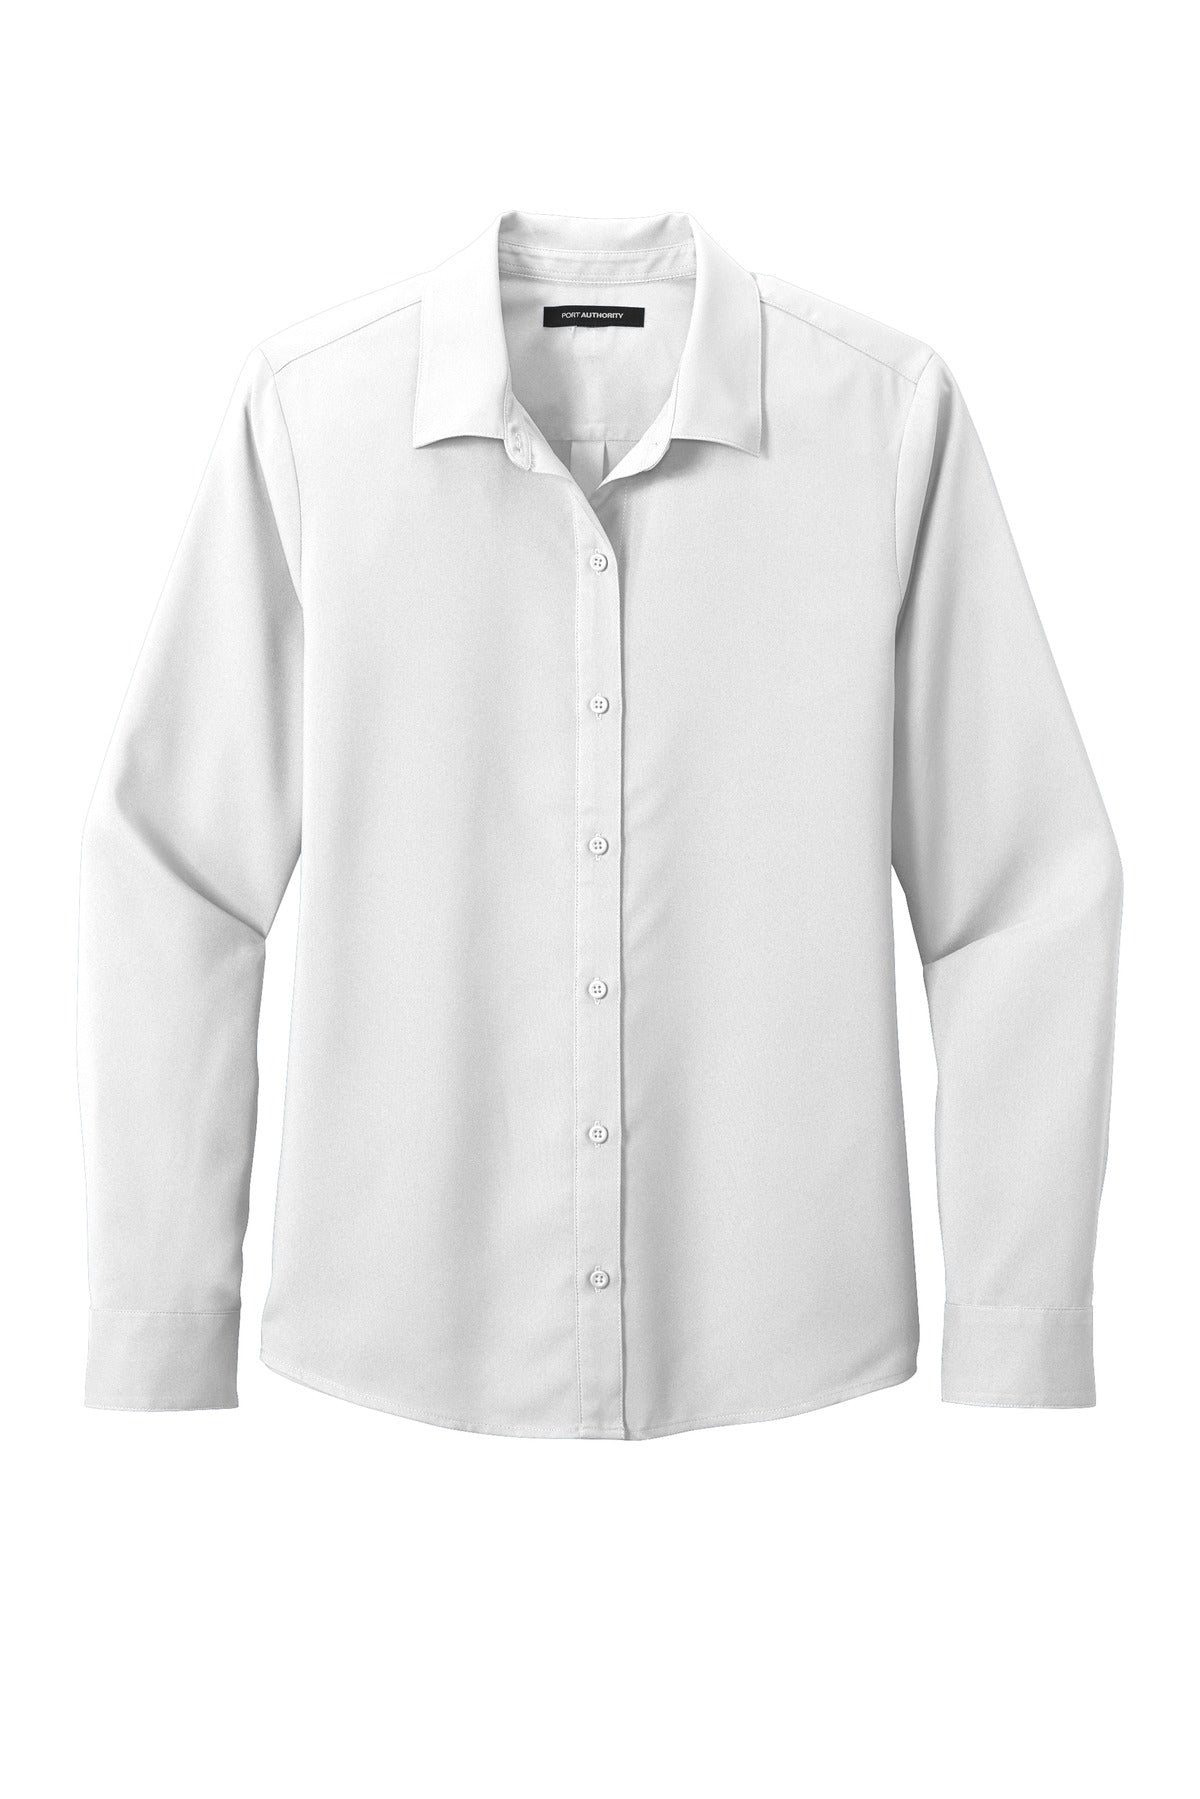 Port Authority ® Ladies Long Sleeve Performance Staff Shirt